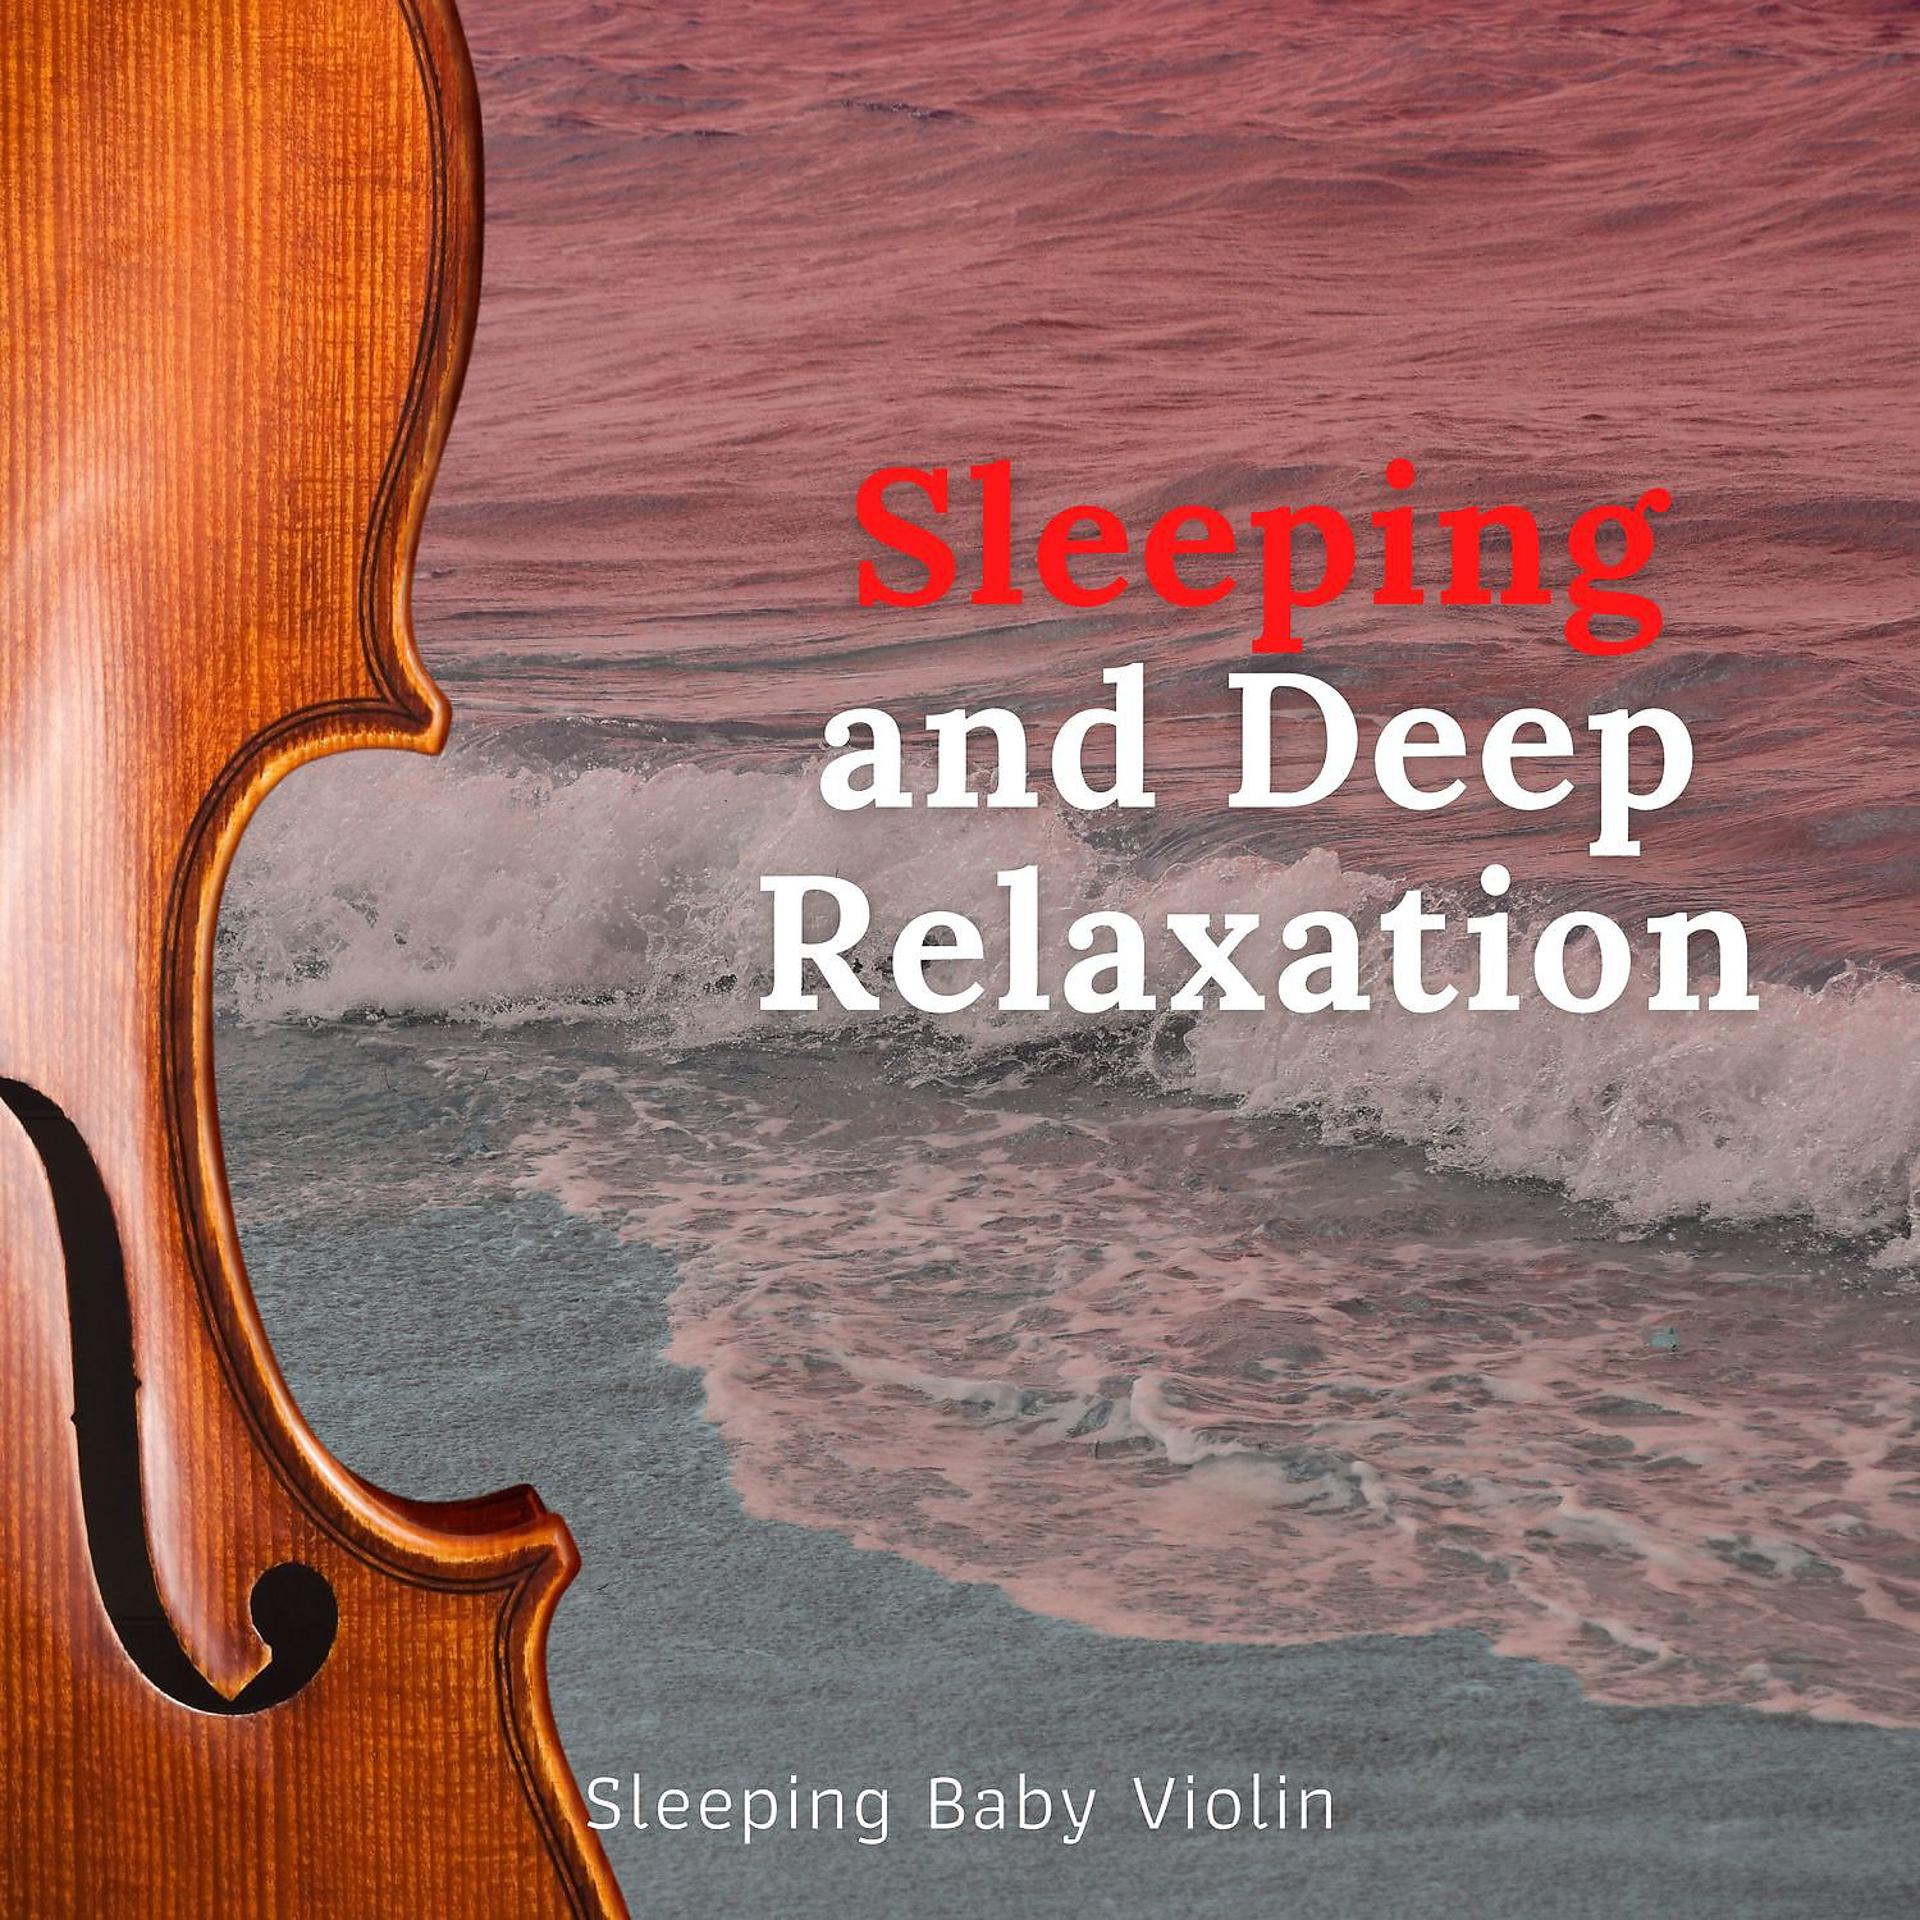 Постер альбома Violin and Piano Music for Sleeping and Deep Relaxation